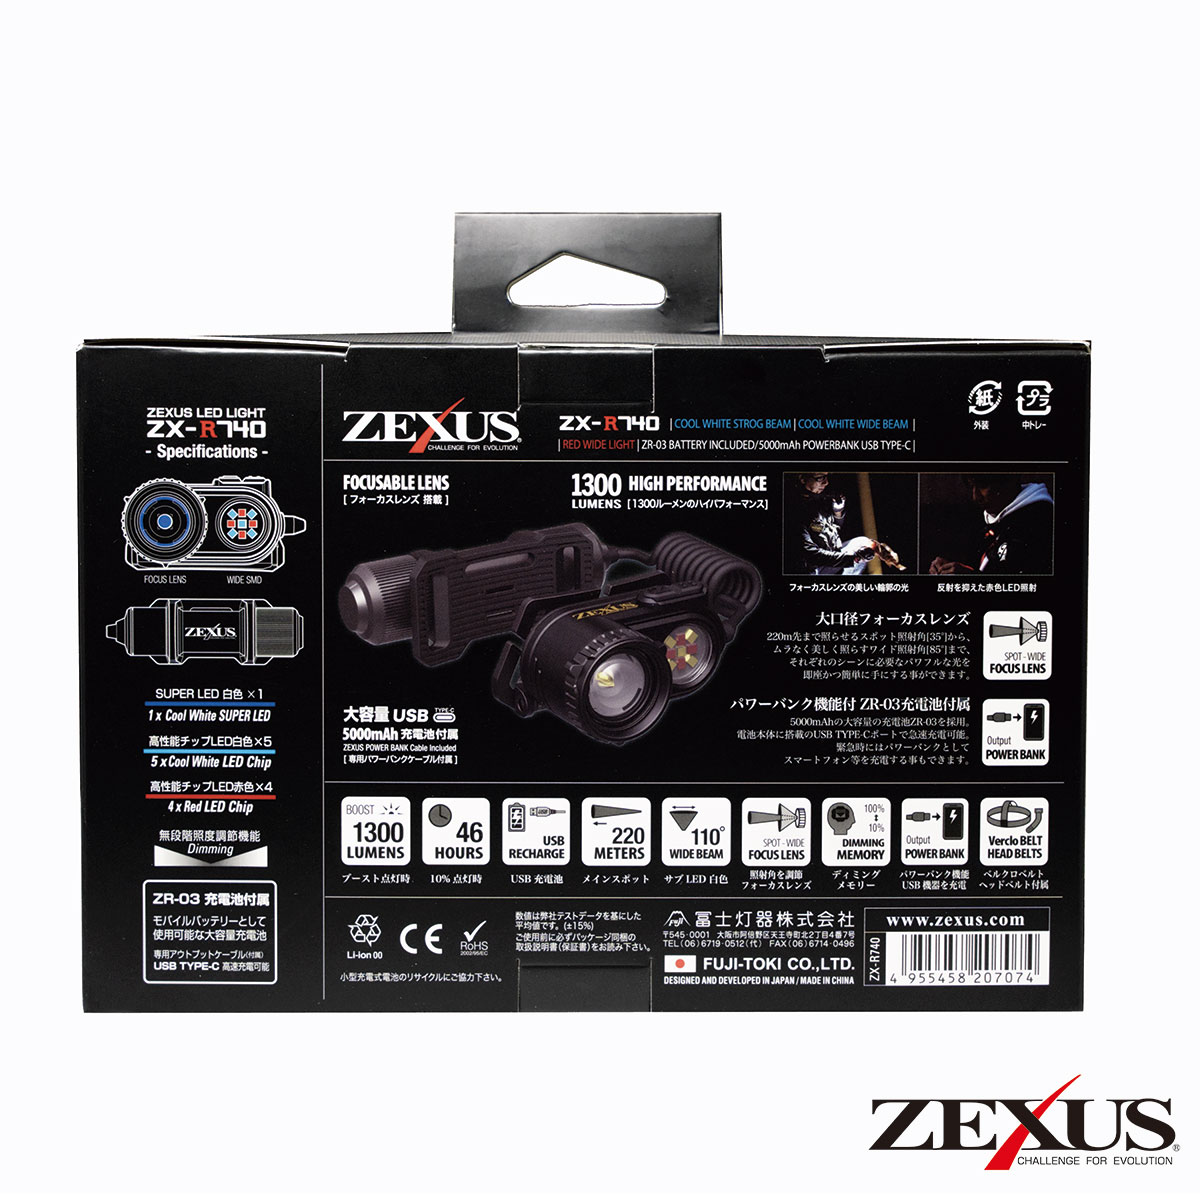 ZX-R740 公式限定非売品カッティングステッカー付 | ZEXUS公式サイト 